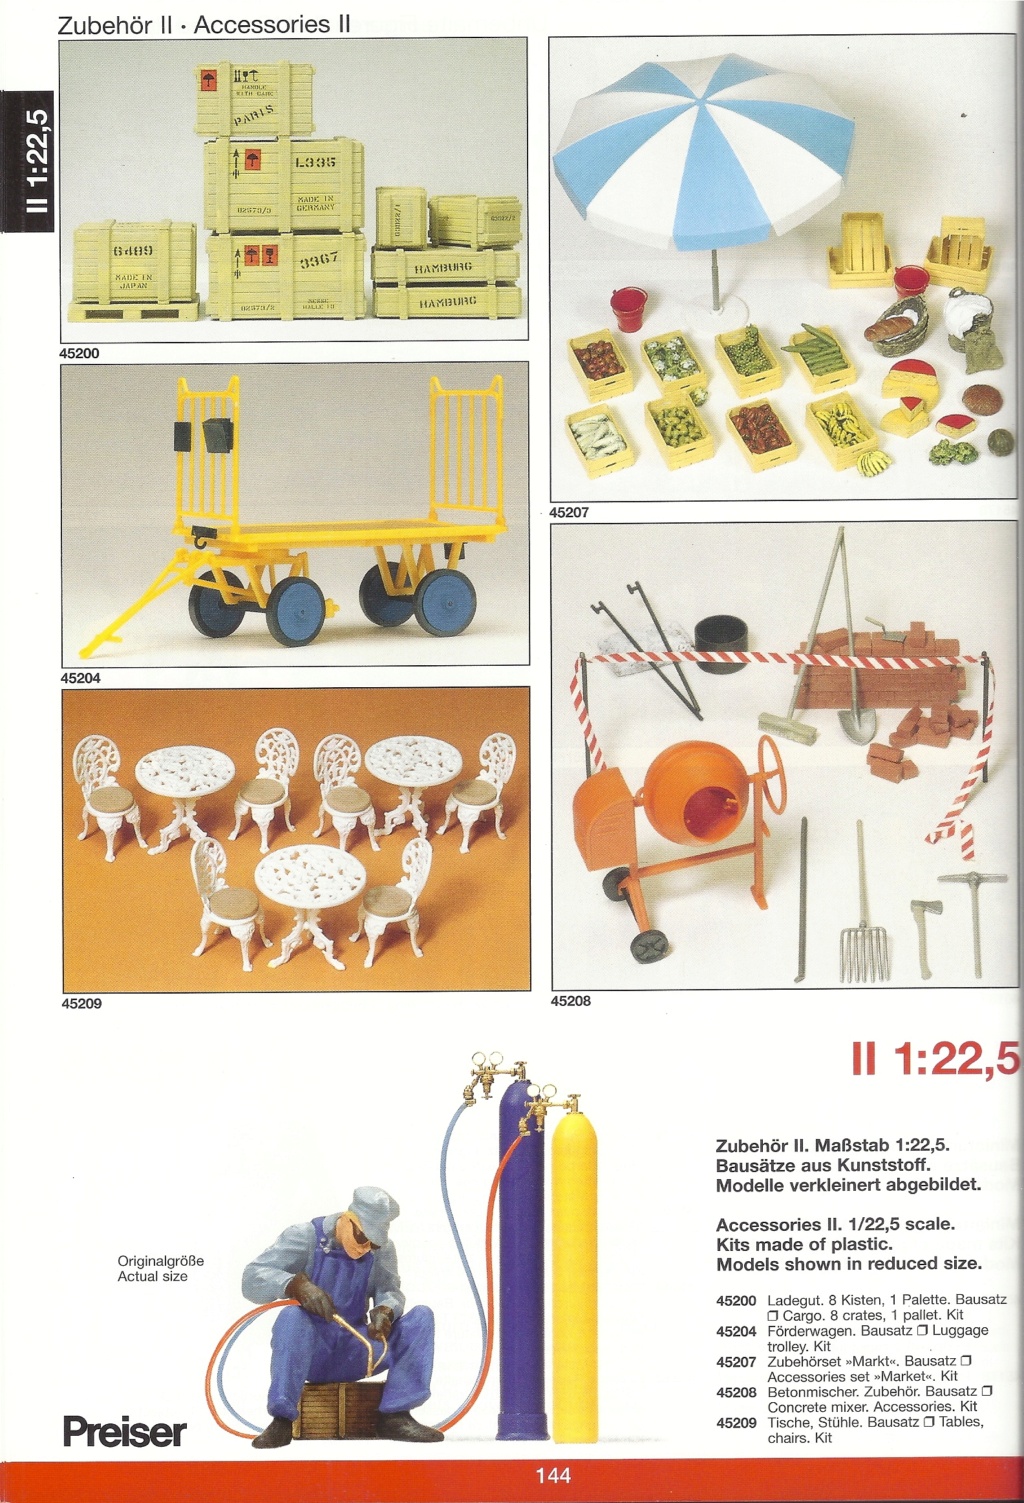 [PREISER 2007] Catalogue PK 24 2007 Preis786